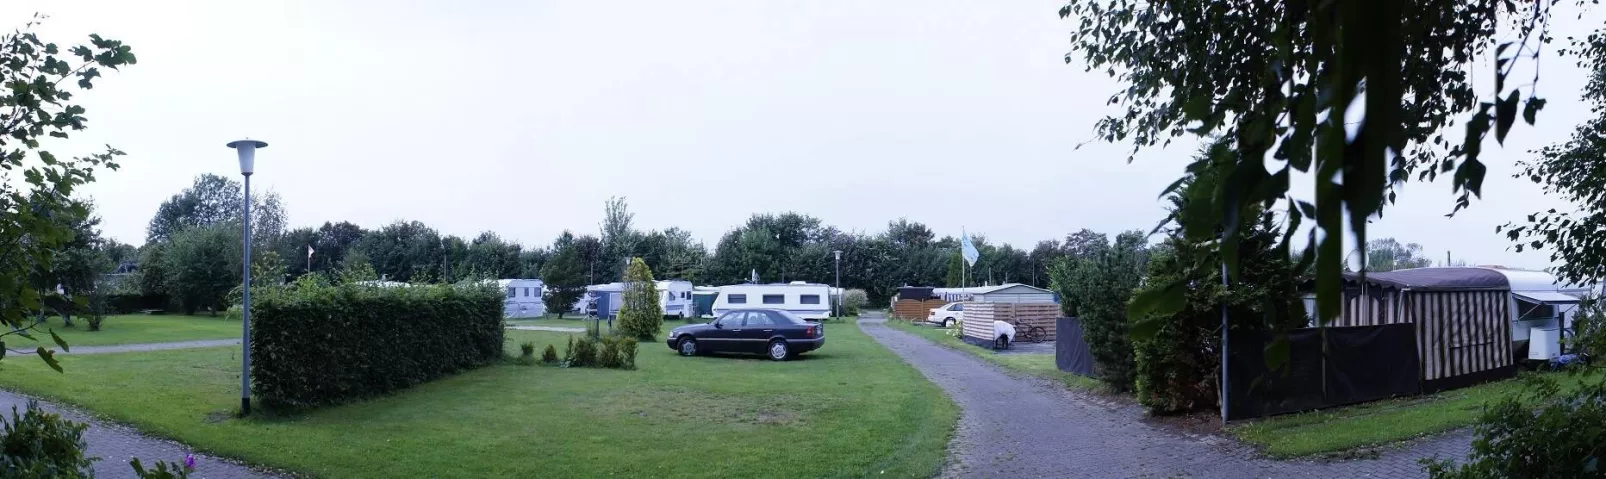 Eidertal Camping GmbH